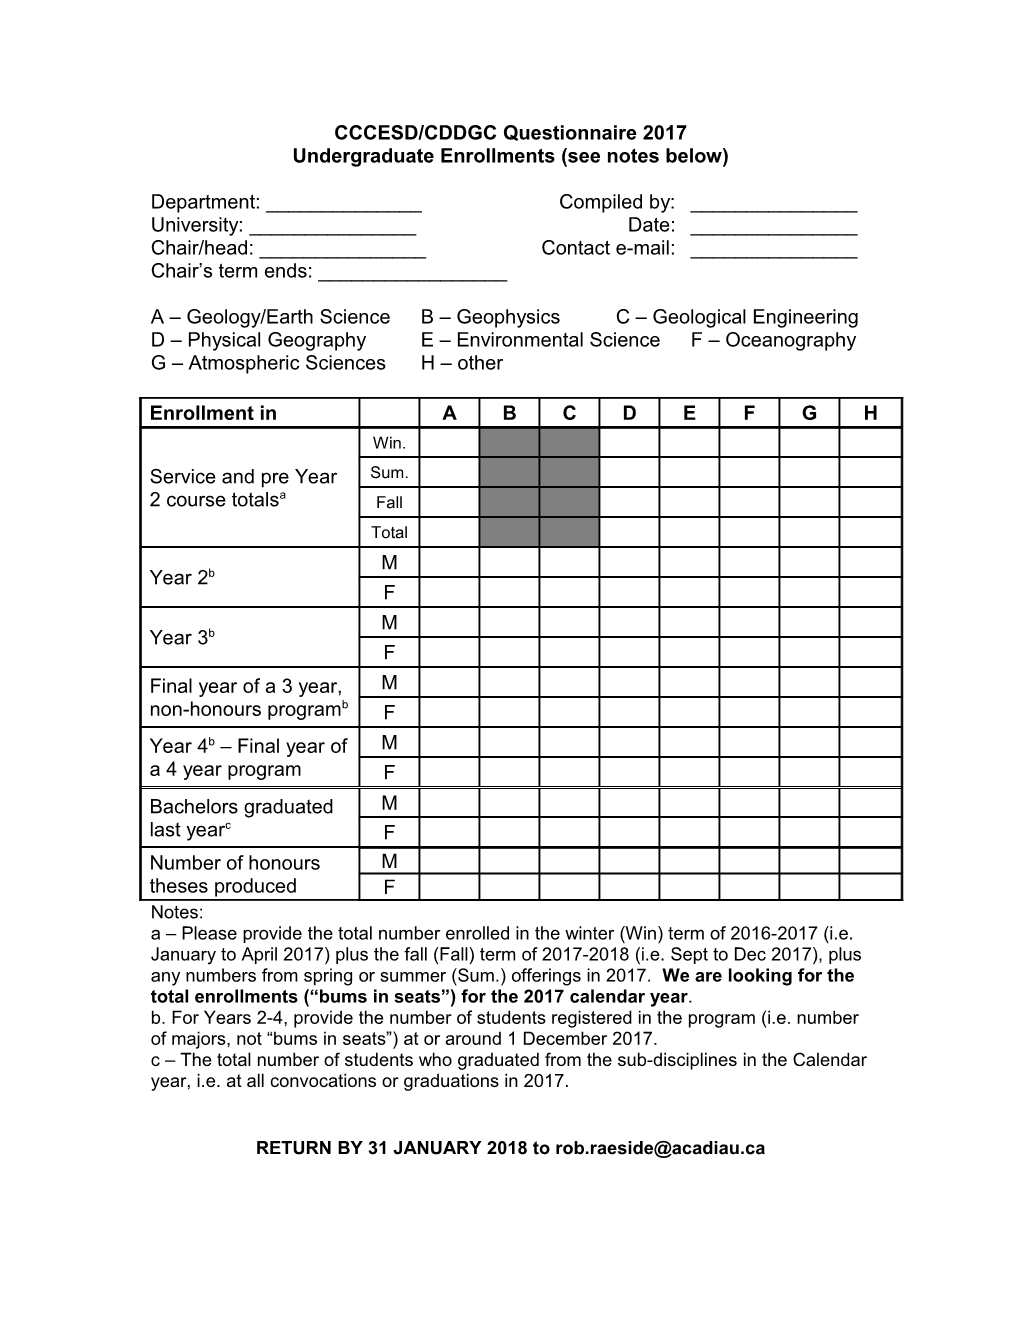 CCCESD/CDDGC Questionnaire 2011